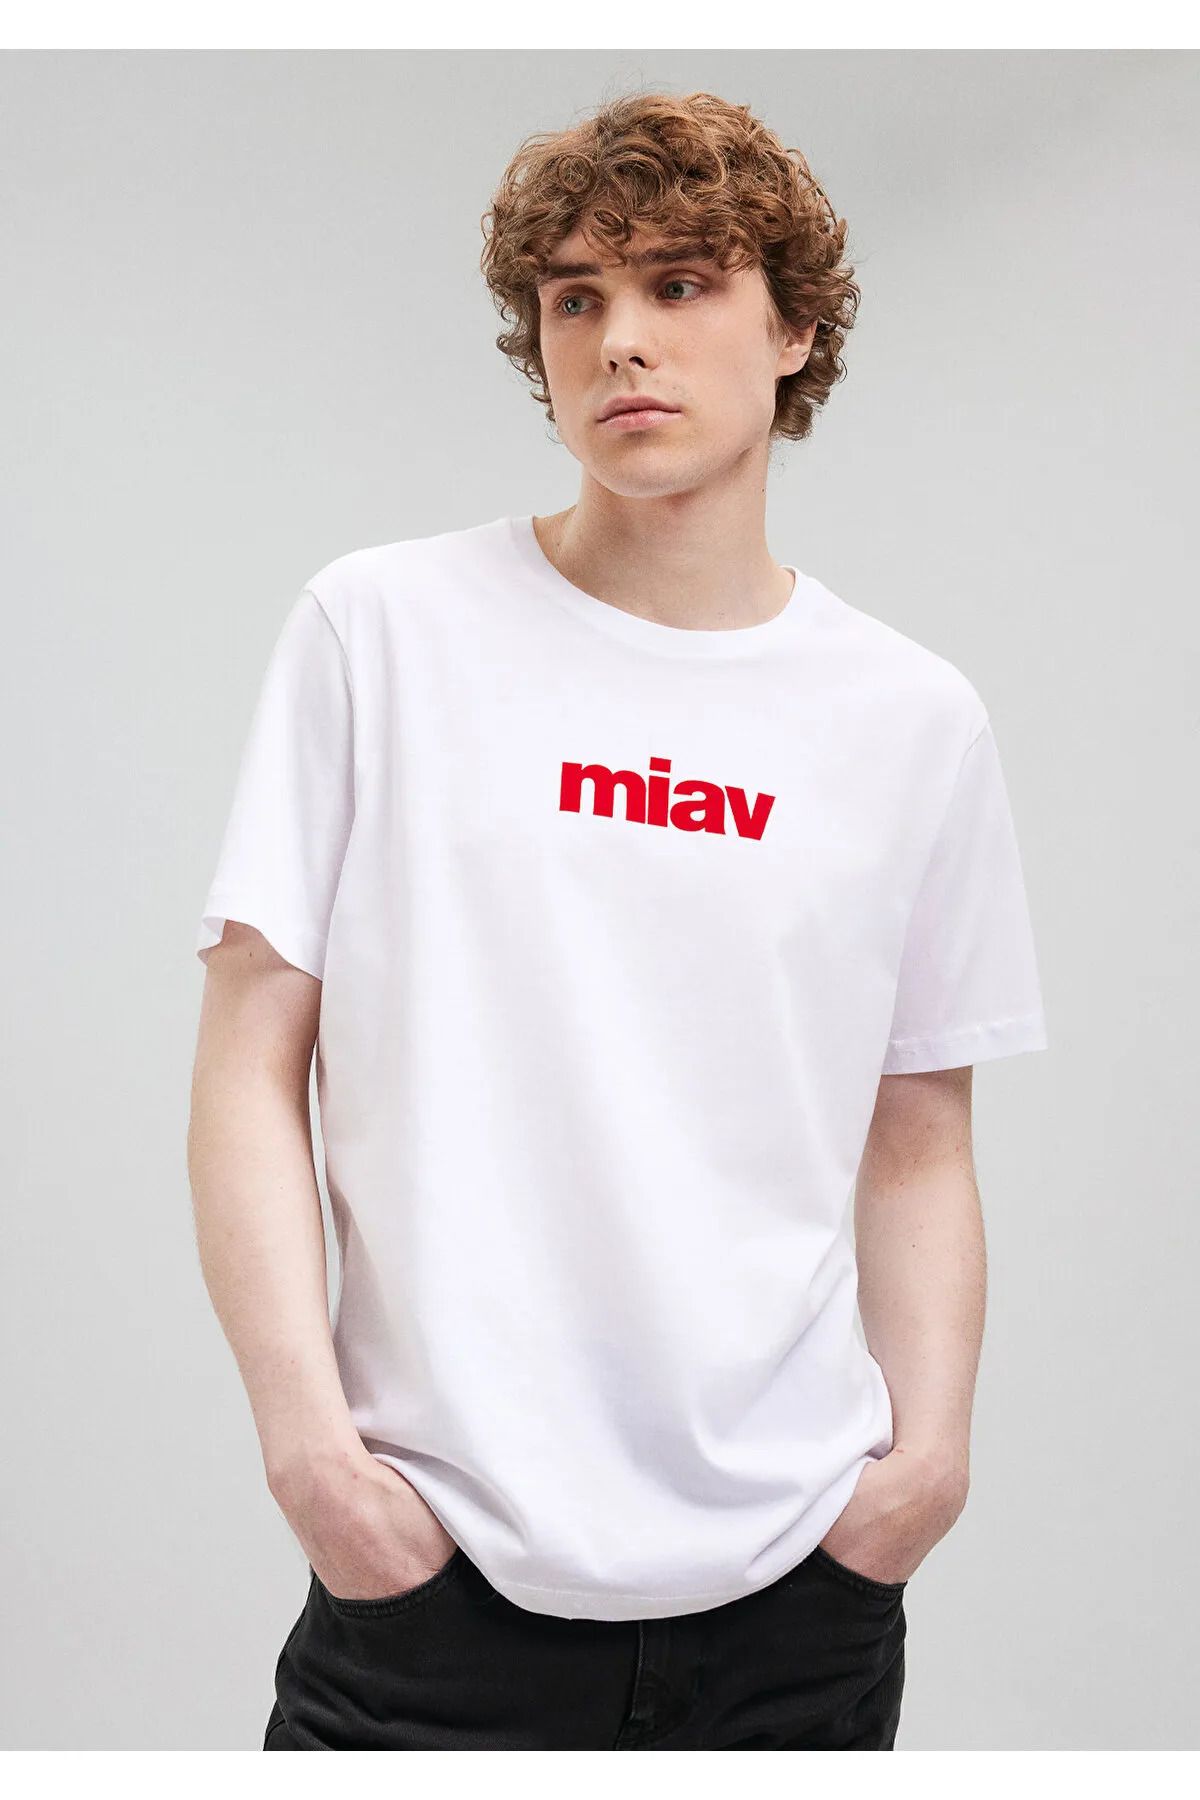 Mavi تی شرت سفید چاپ شده Red MIAV به طور منظم / برش معمولی 067153-602-455